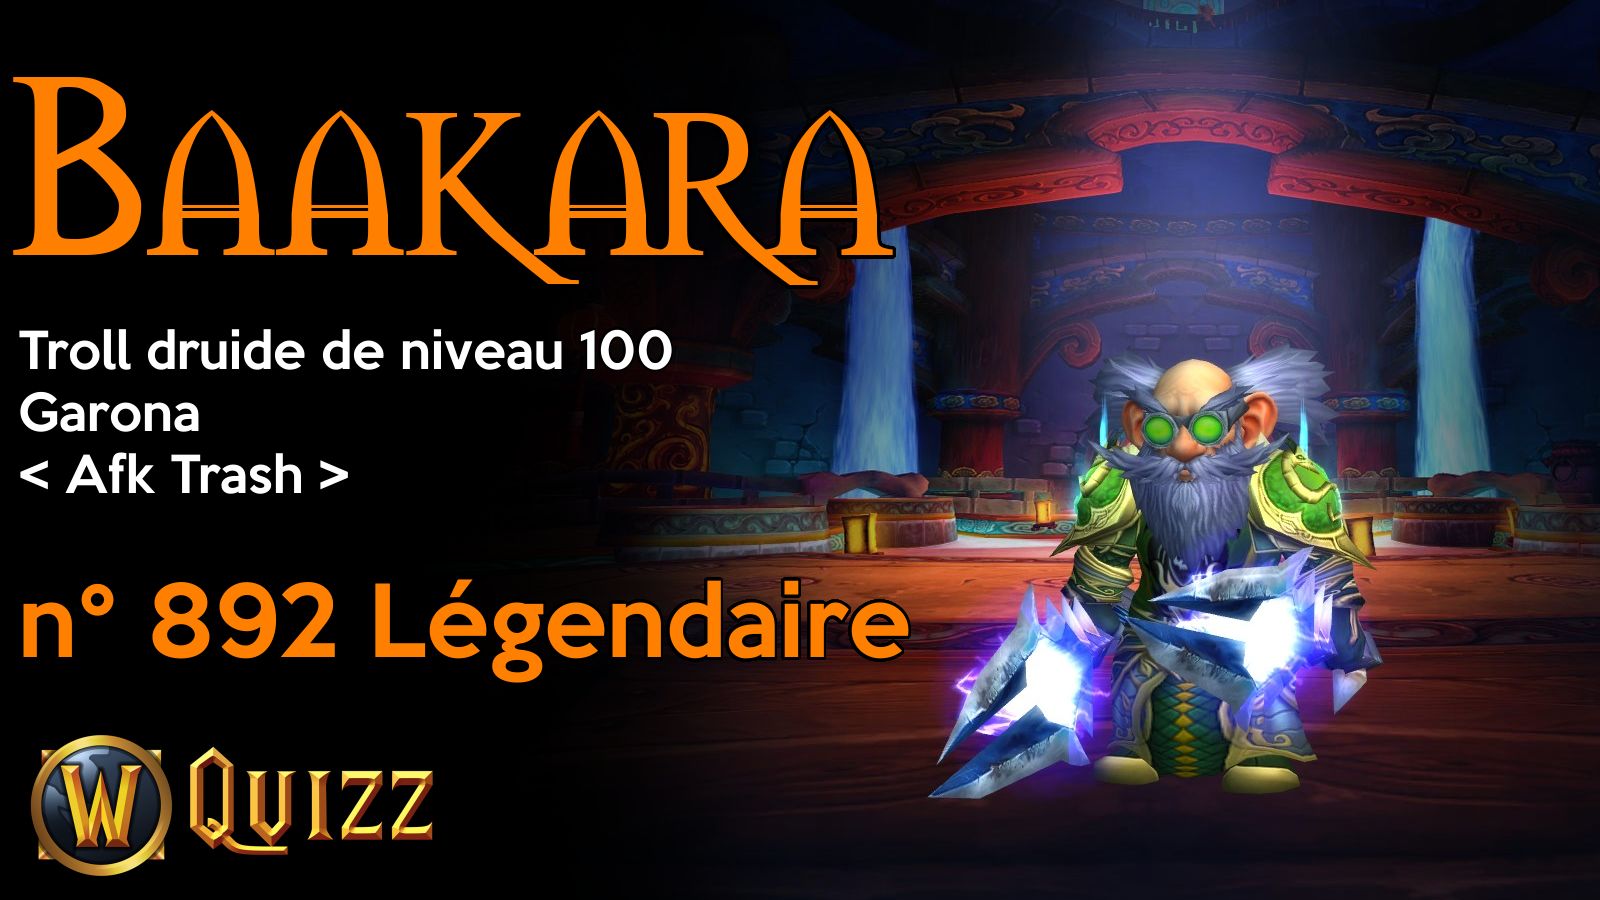 Baakara, Troll druide de niveau 100, Garona